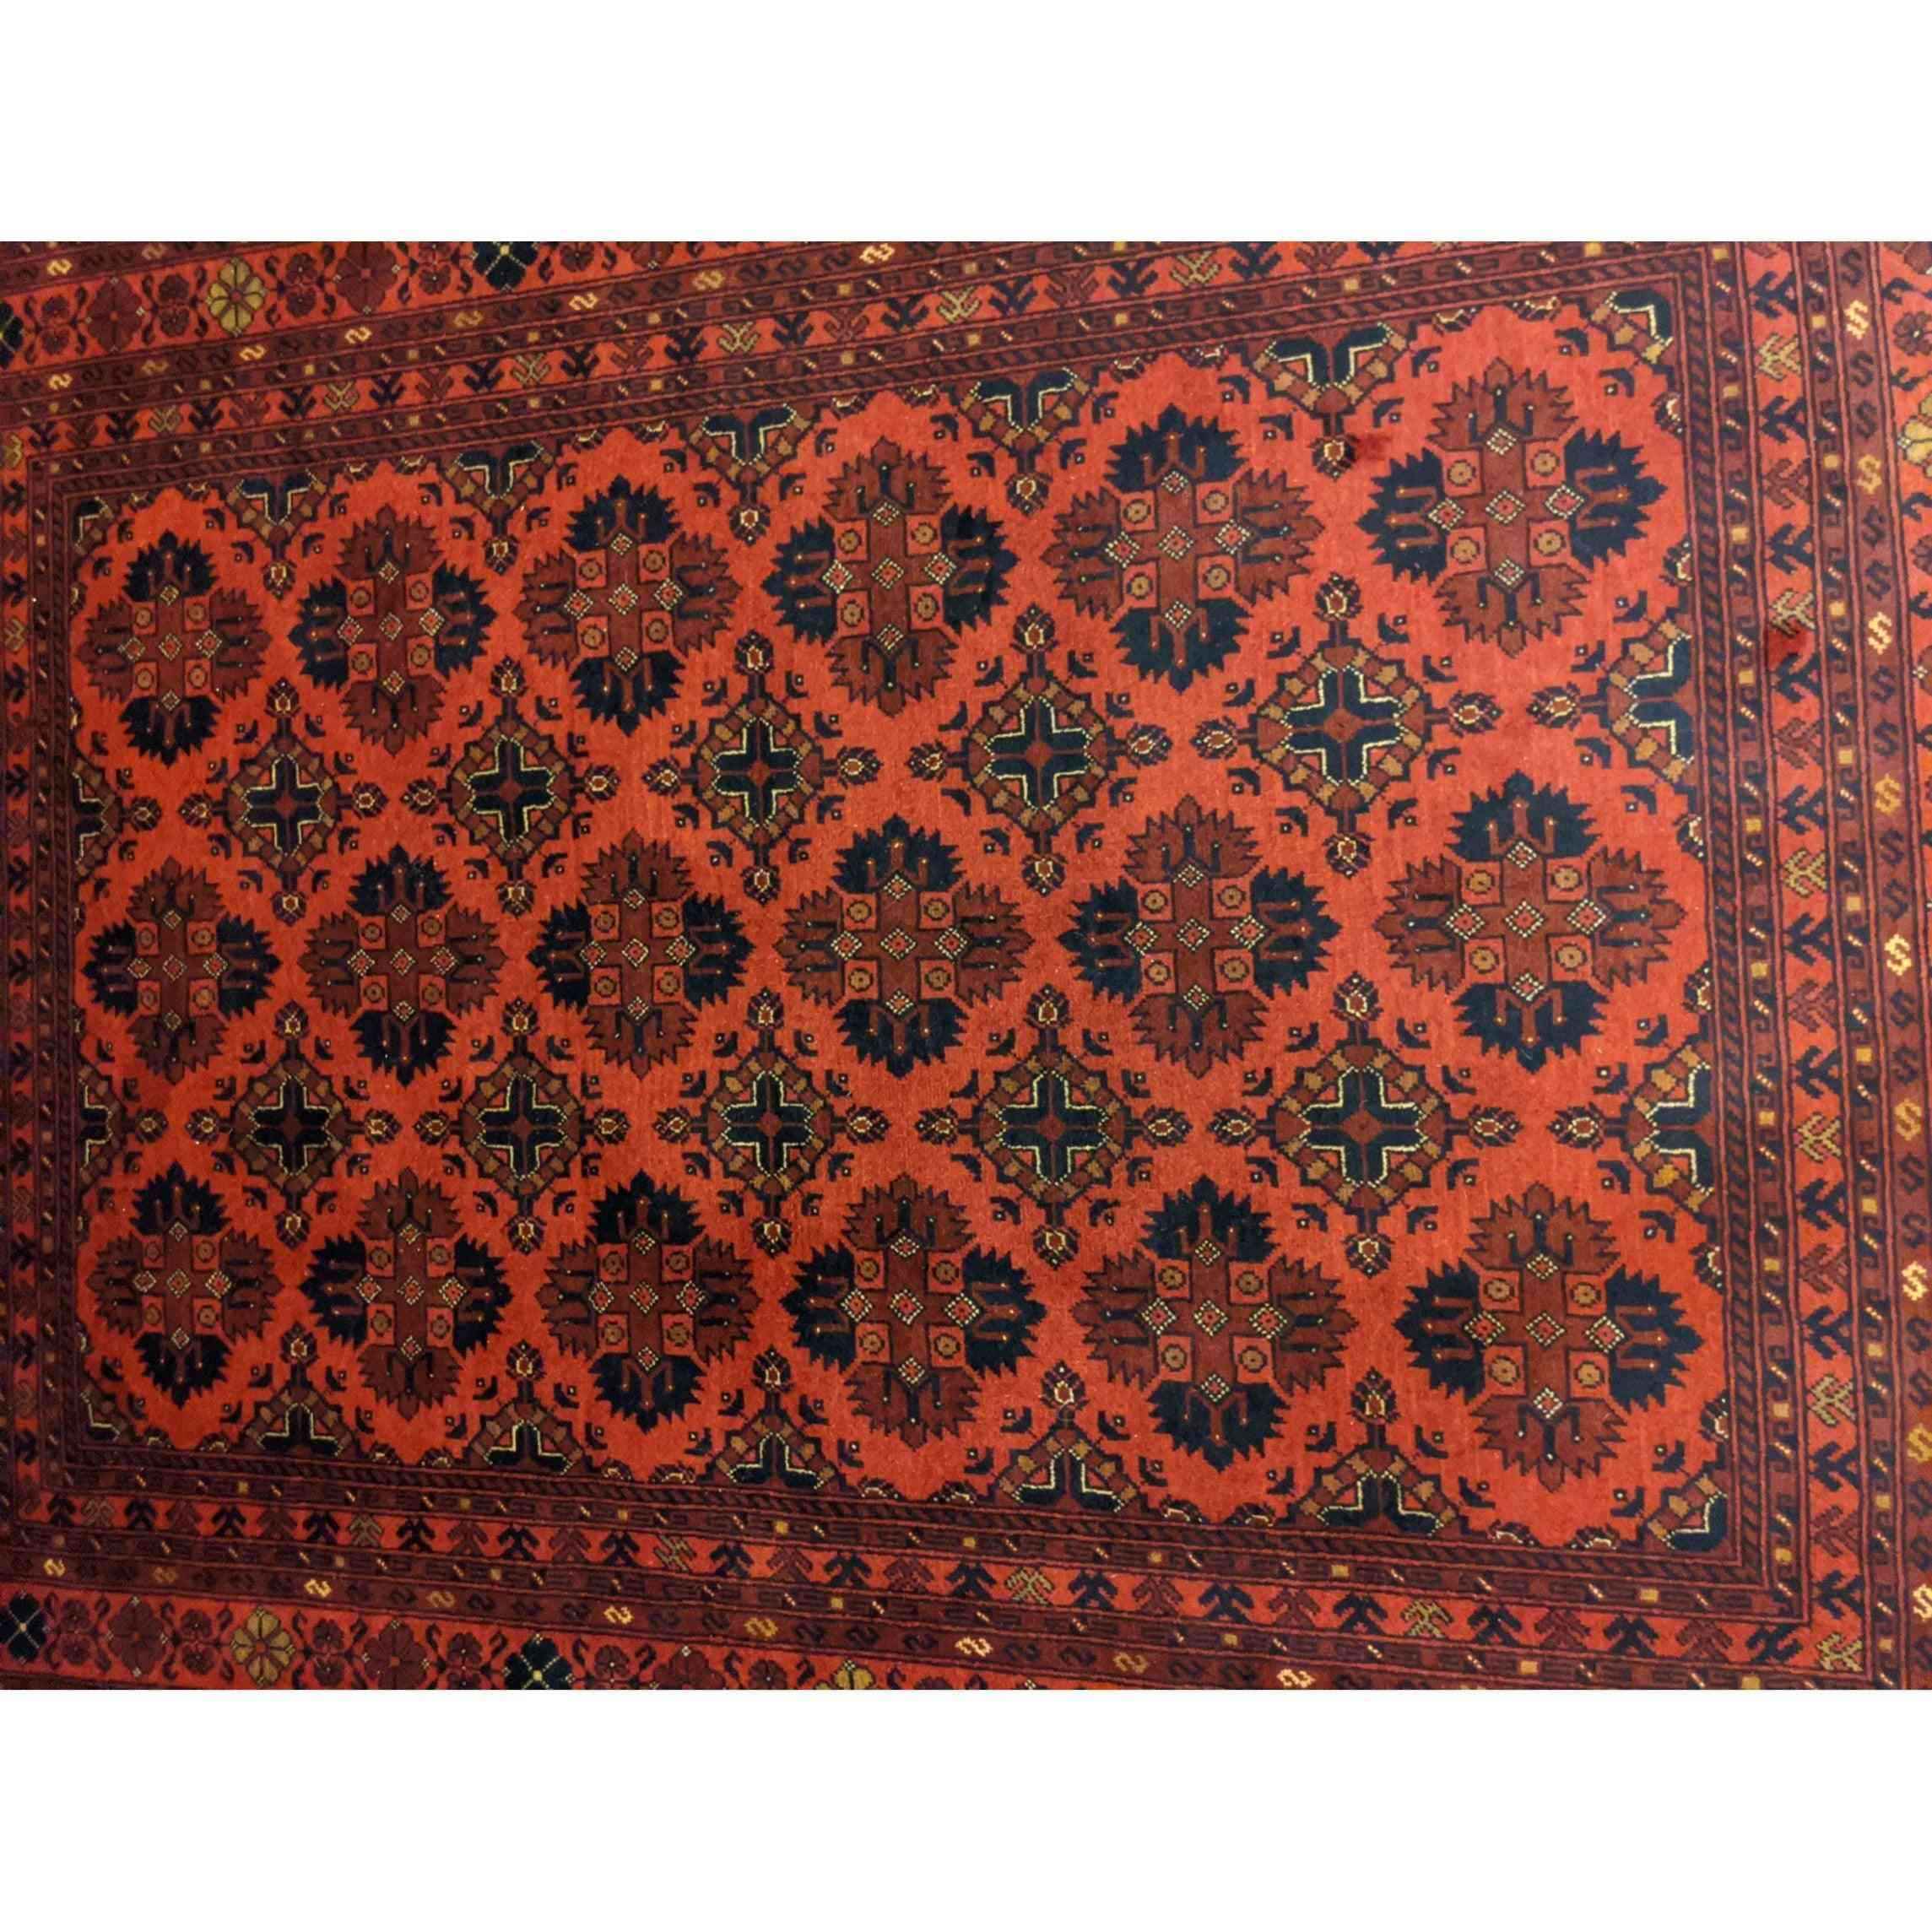 224 x 169 cm Afghan Khan Tribal Red Rug - Rugmaster